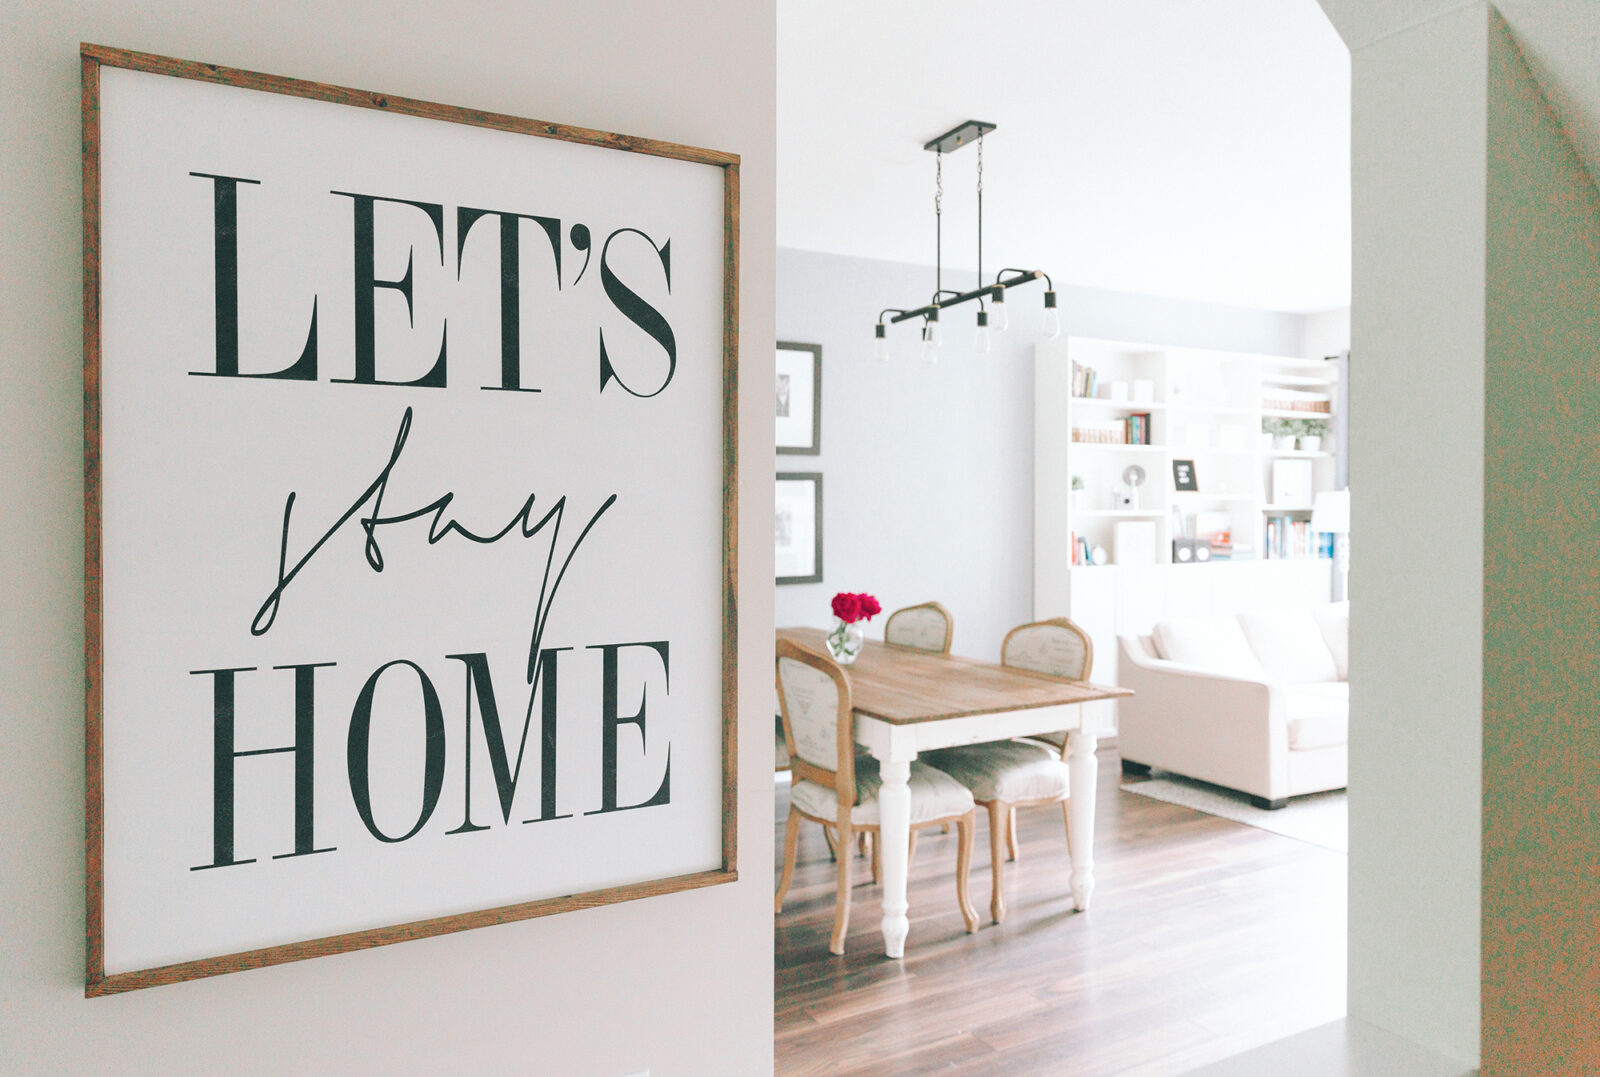 Sign decor bright interior living room home words simple t20 ZVG6kk 2021 01 26 000843